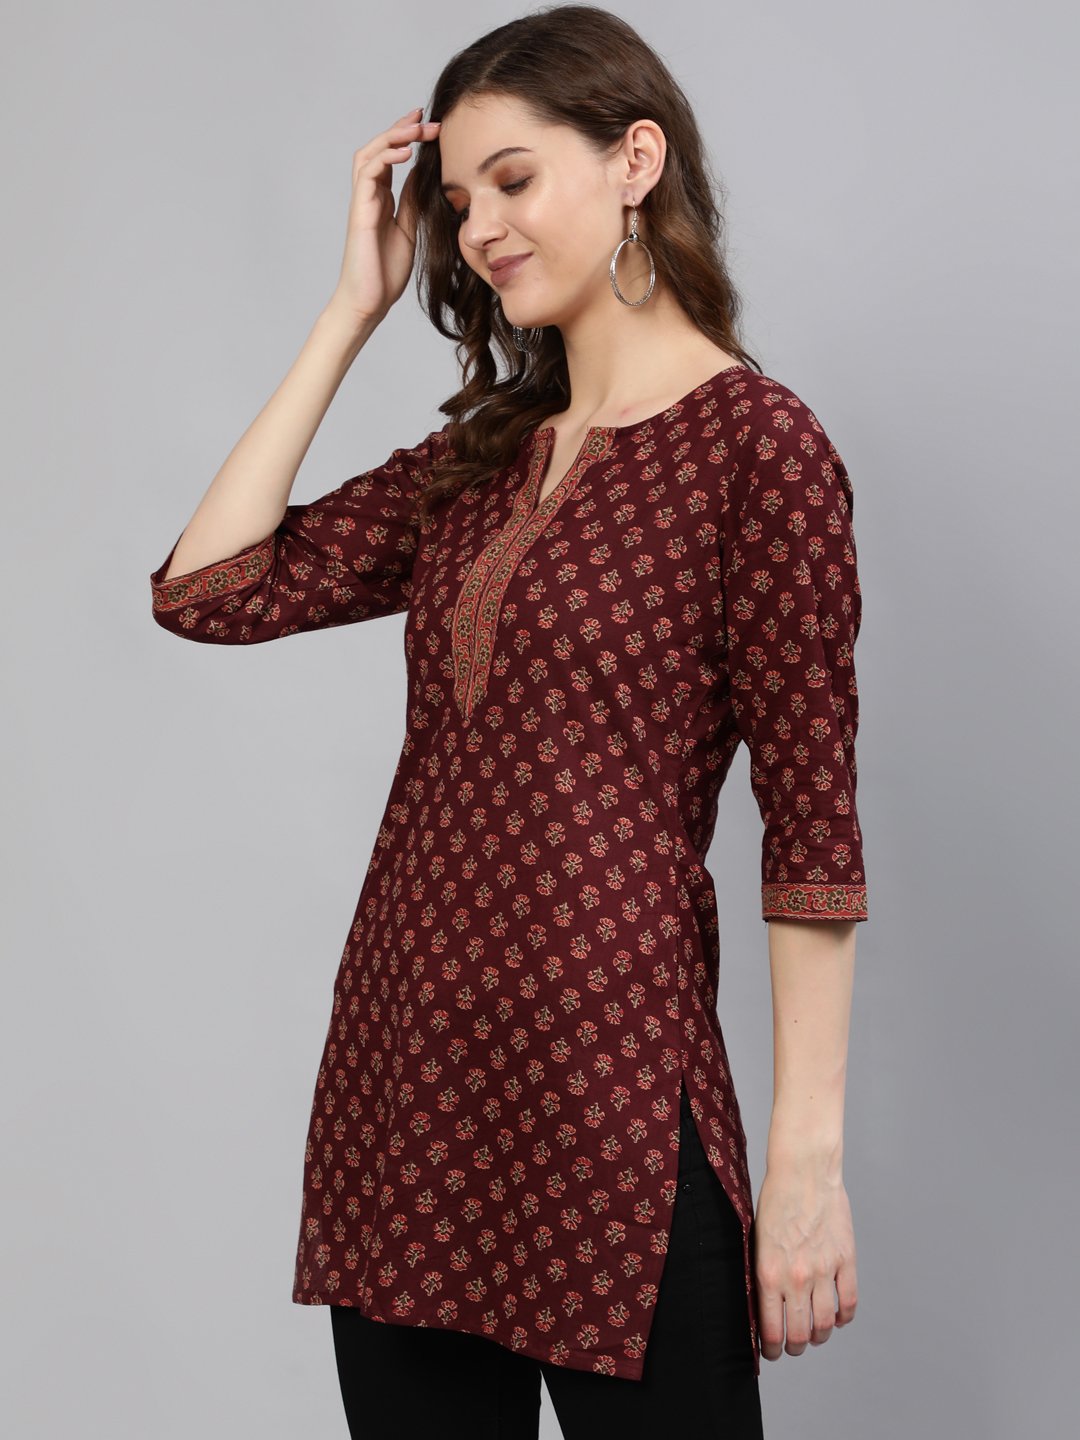 Women's Burgundy Printed Tunic With Three Quarter Sleeves - Nayo Clothing USA